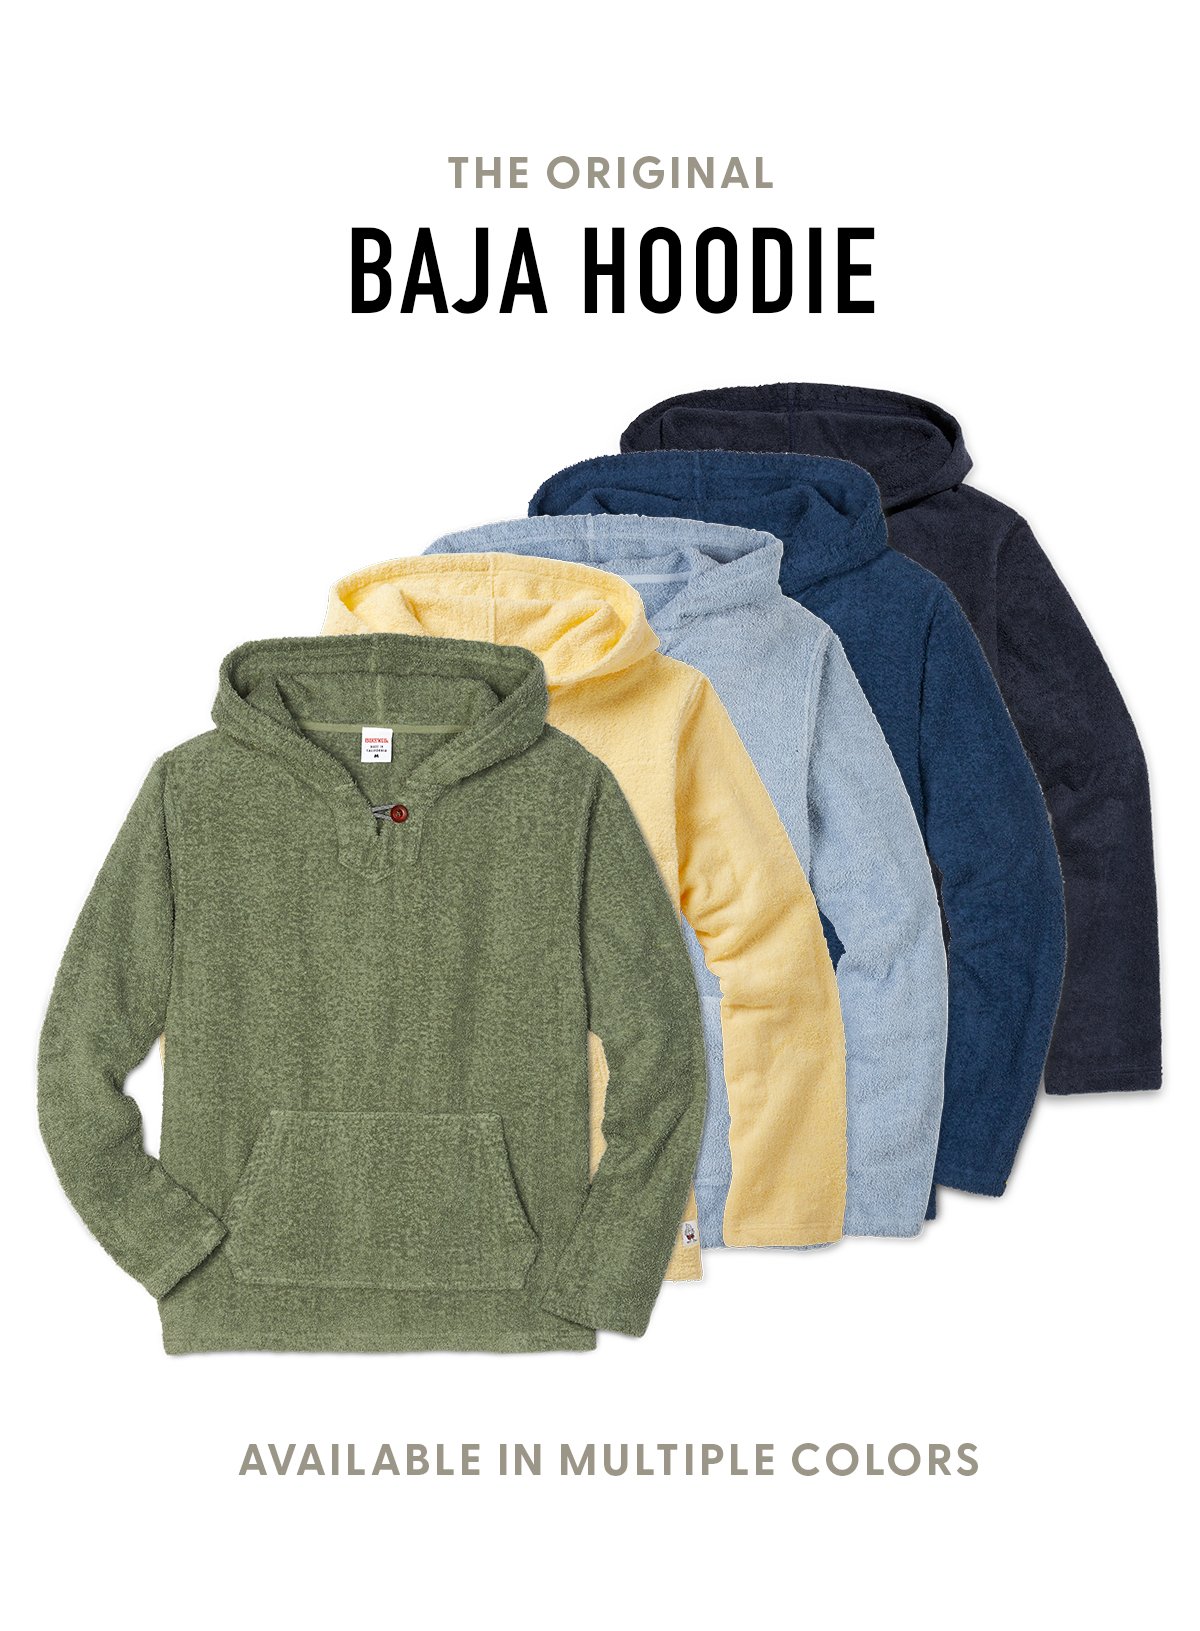 The Original Baja Hoodie - Available in multiple colors